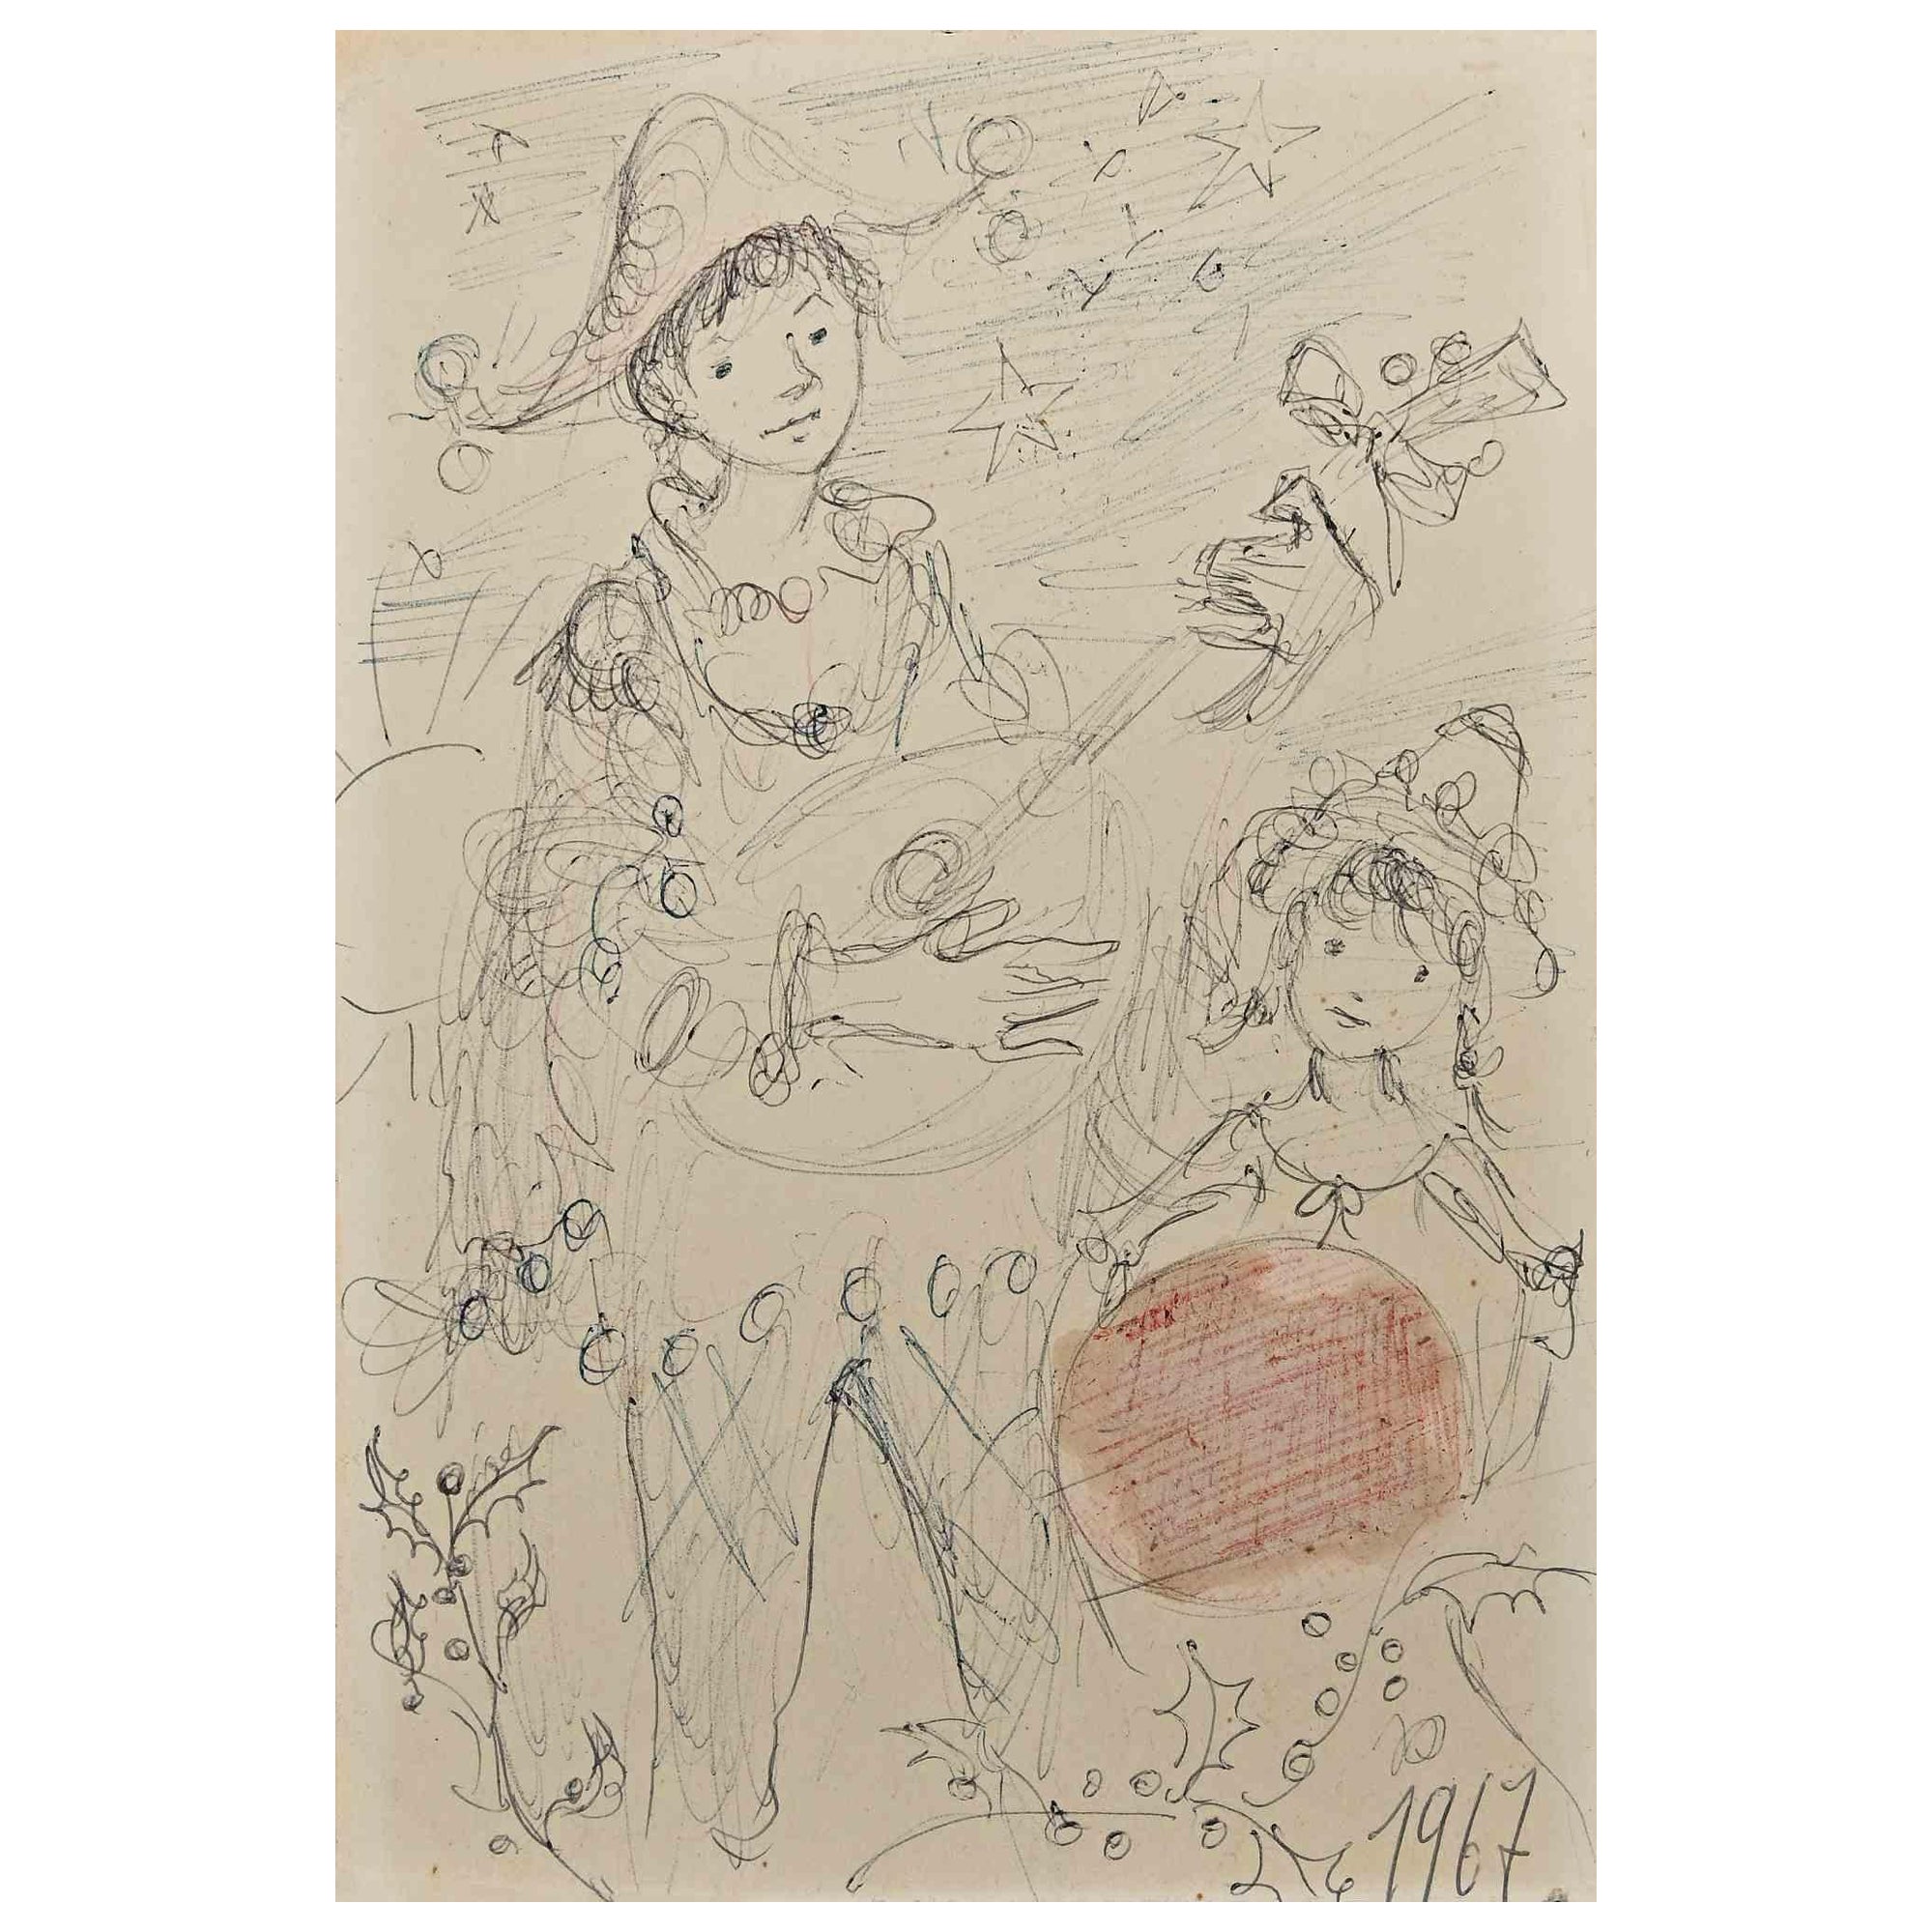 Robert Fontene Figurative Art - Playing Boy, Dancing Girl - Original Drawing by R. Fontene - 1967